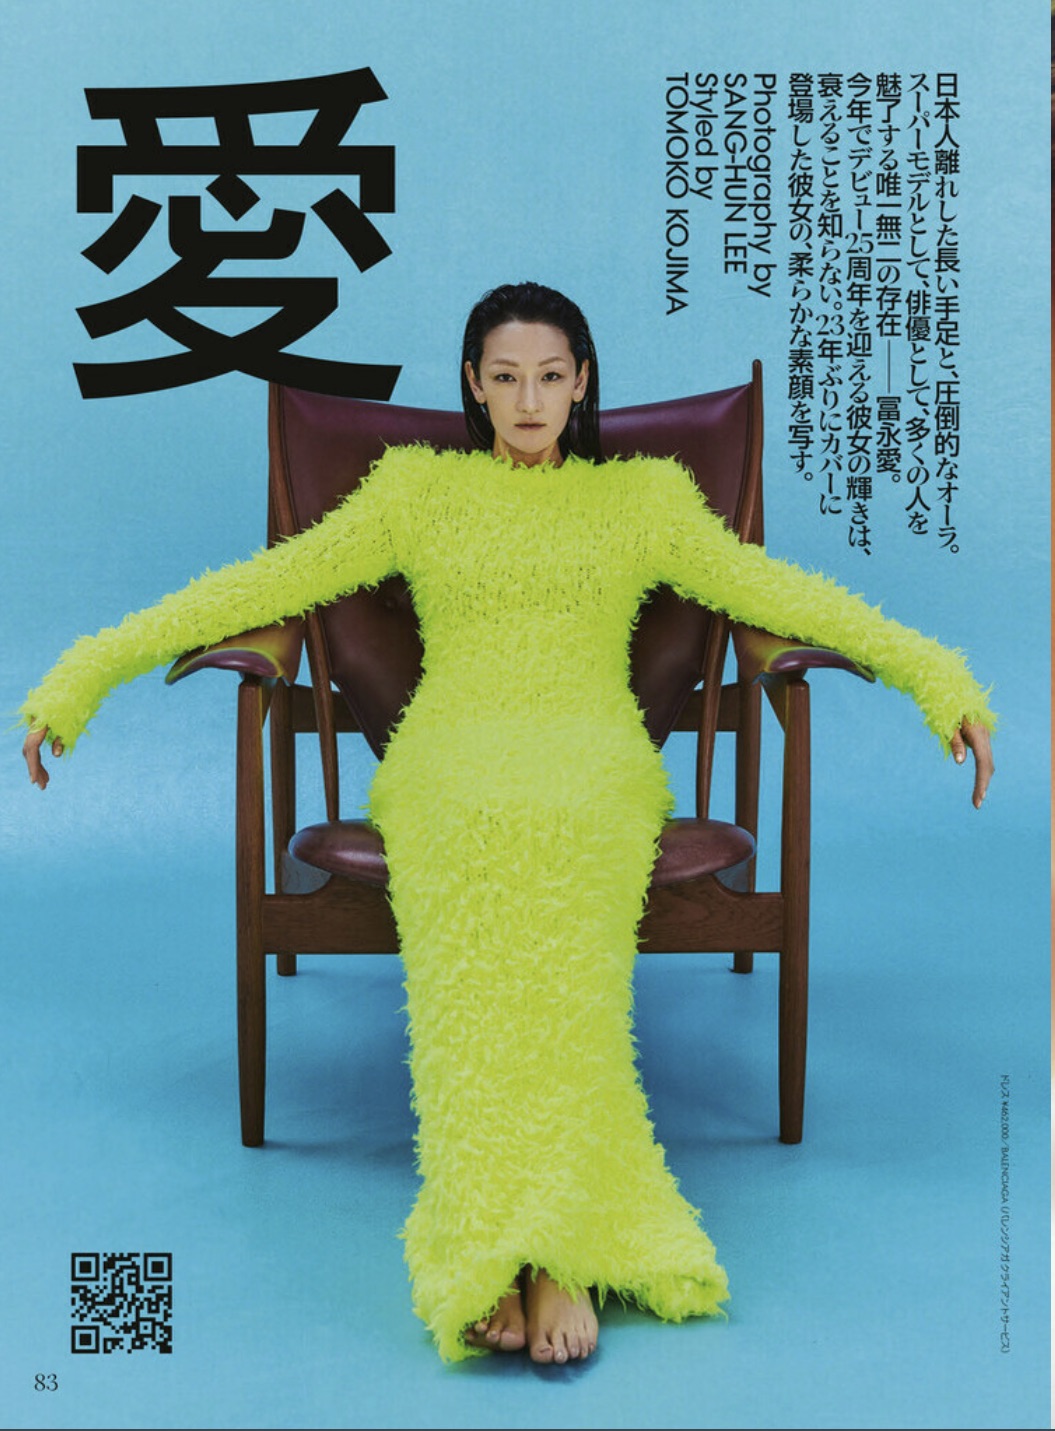 Vogue Japan x Ai Tominaga